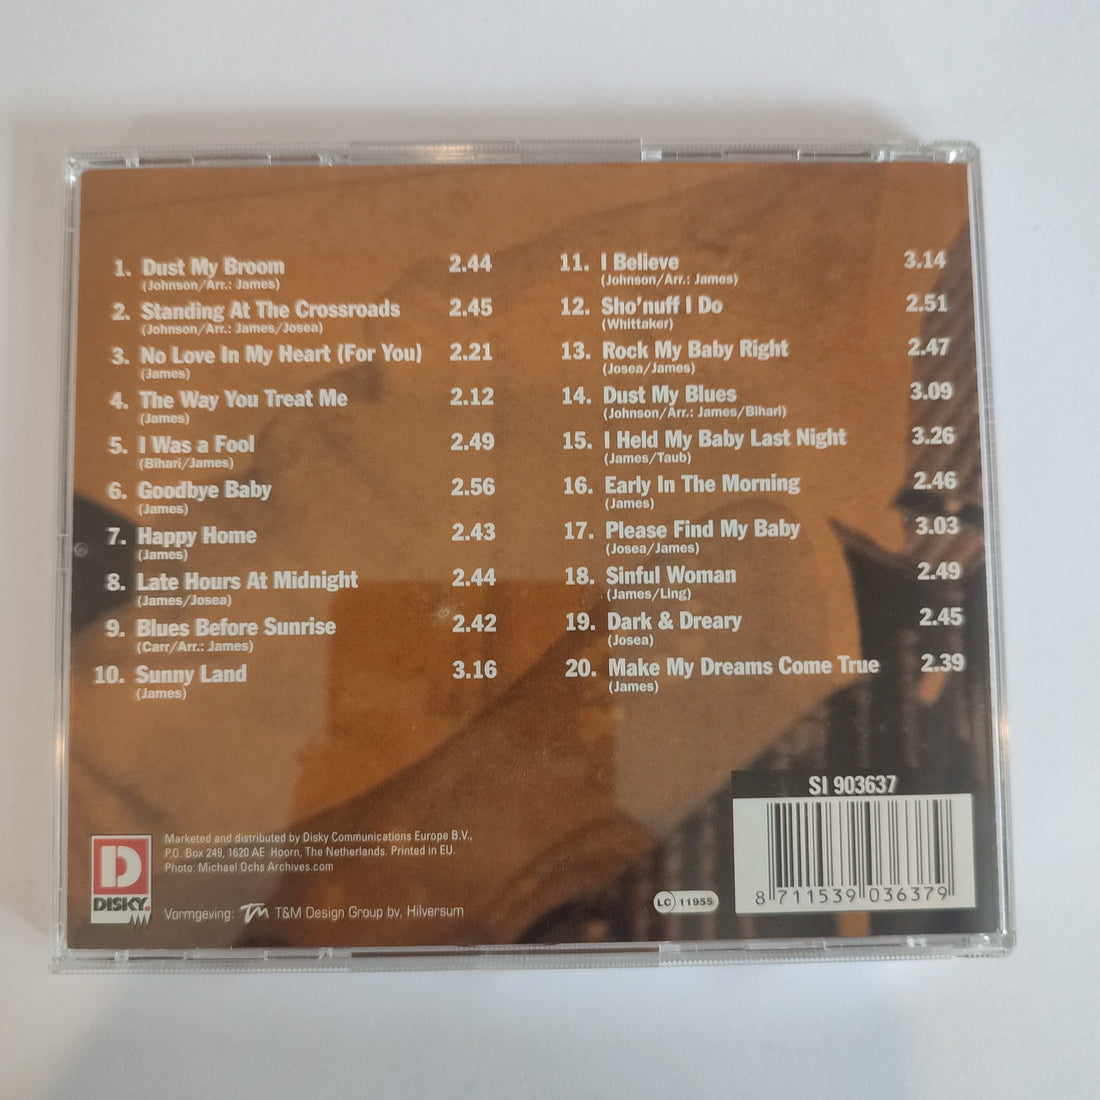 Elmore James - Blues (CD) (VG+)